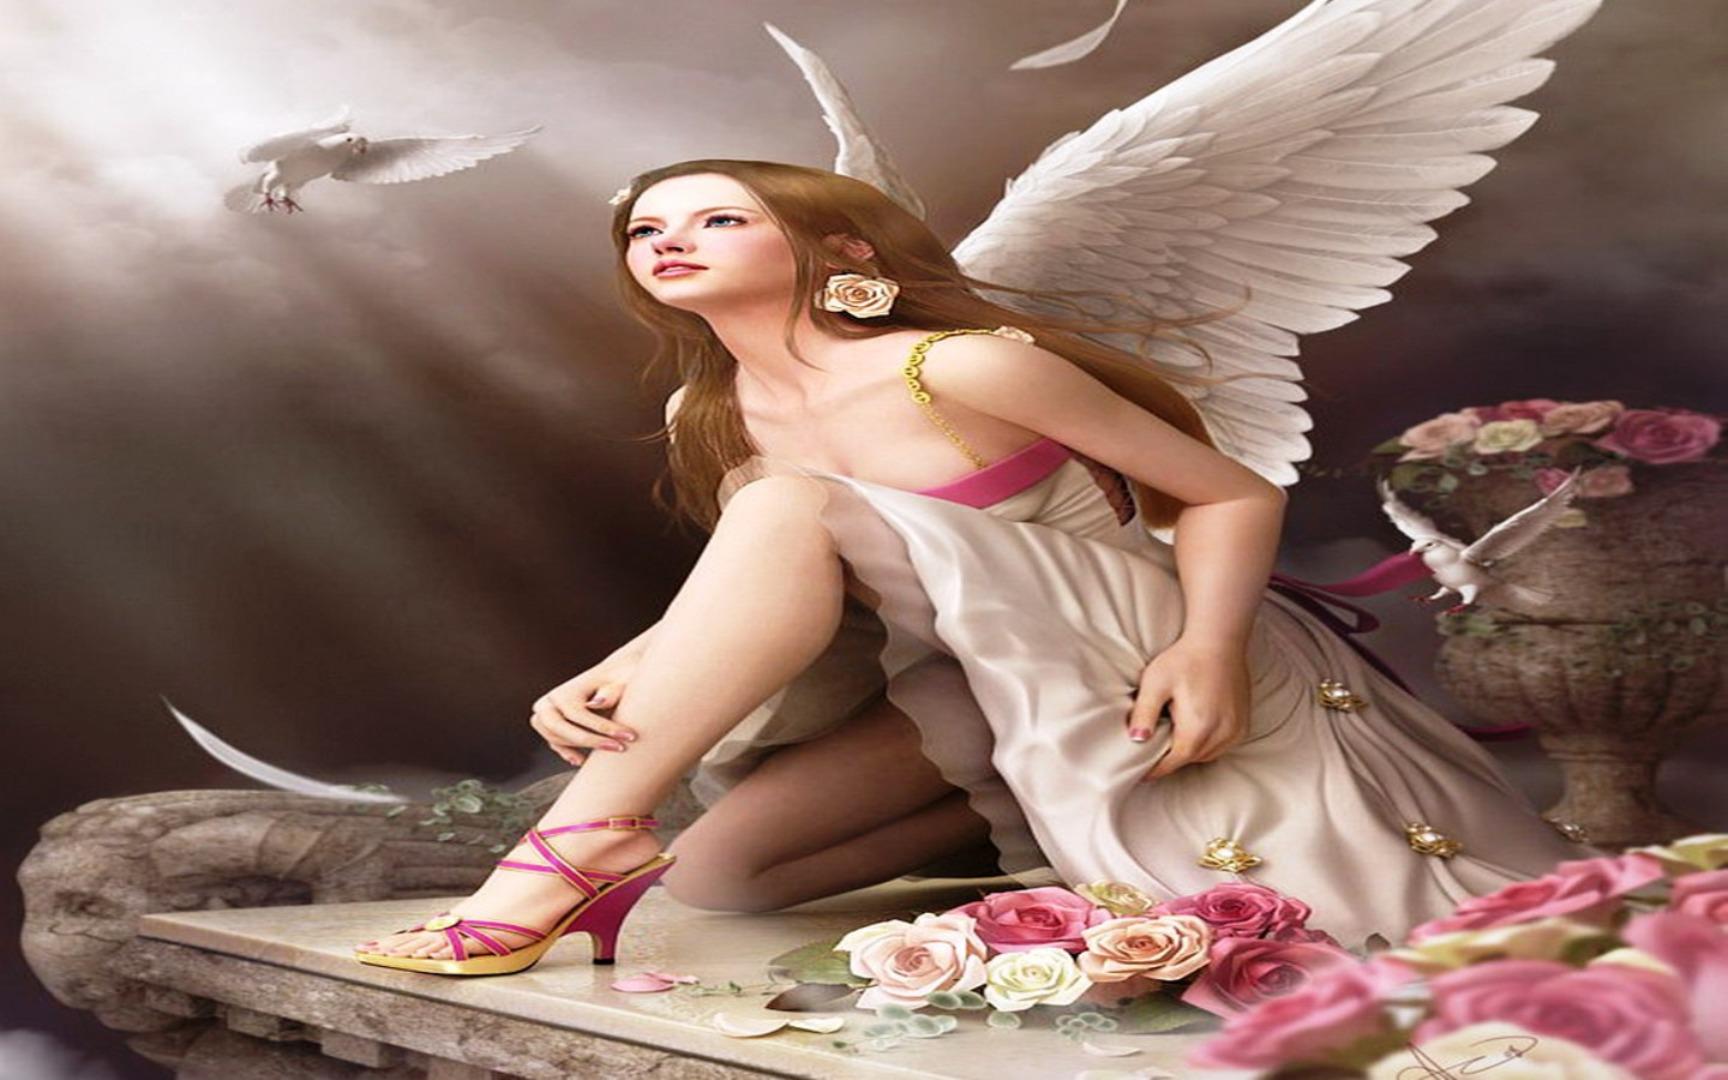 BEAUTIFUL ANGEL WALLPAPER - HD Wallpapers